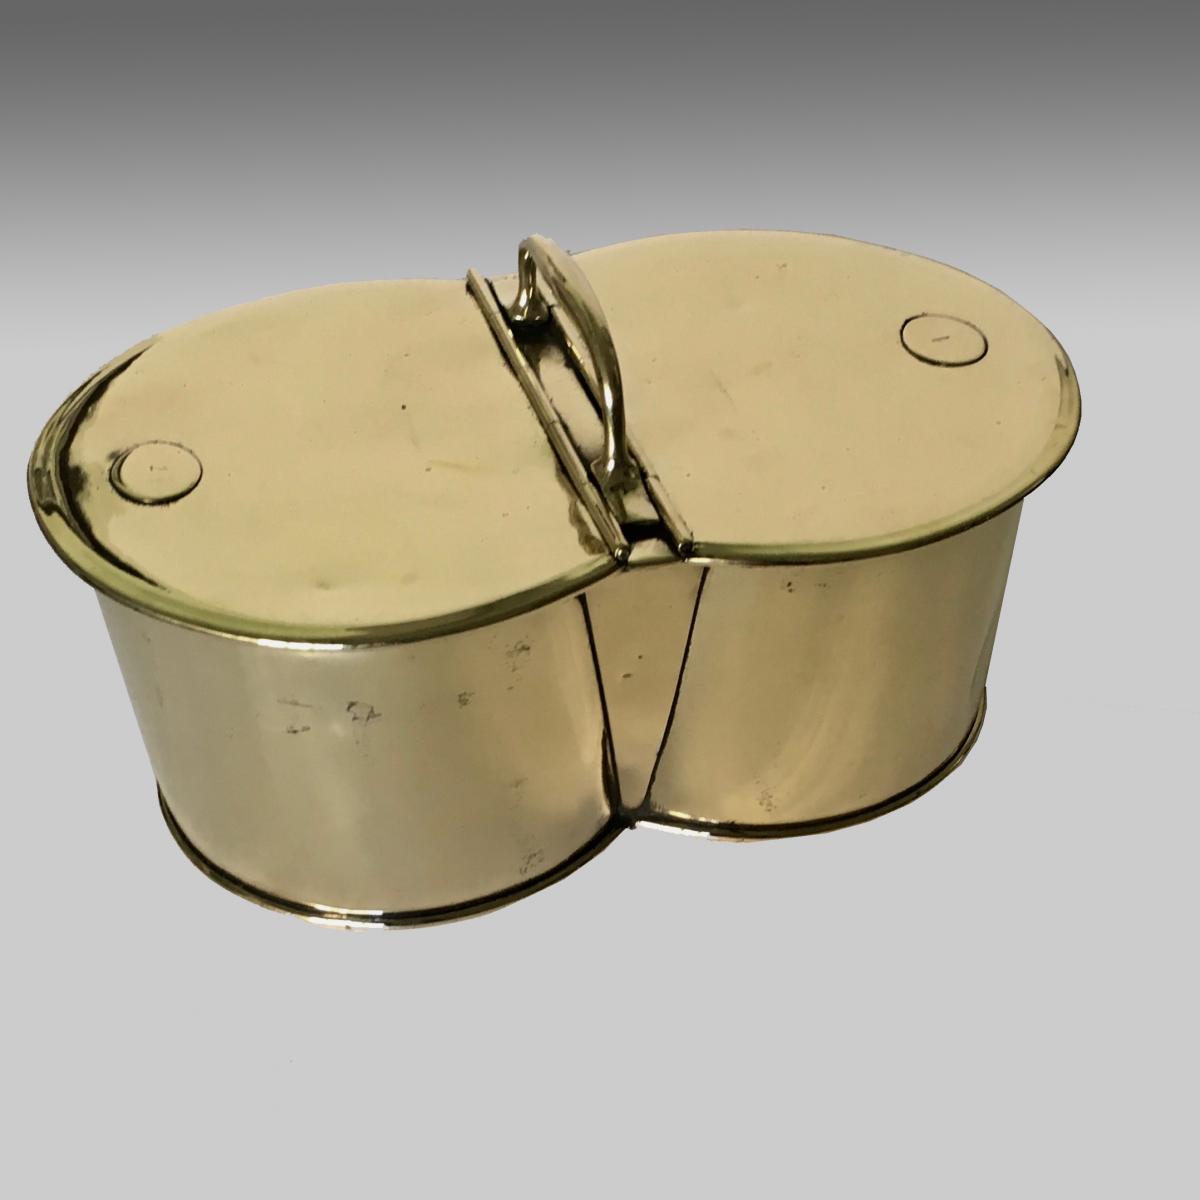 Antique 19th century lidded brass cool box